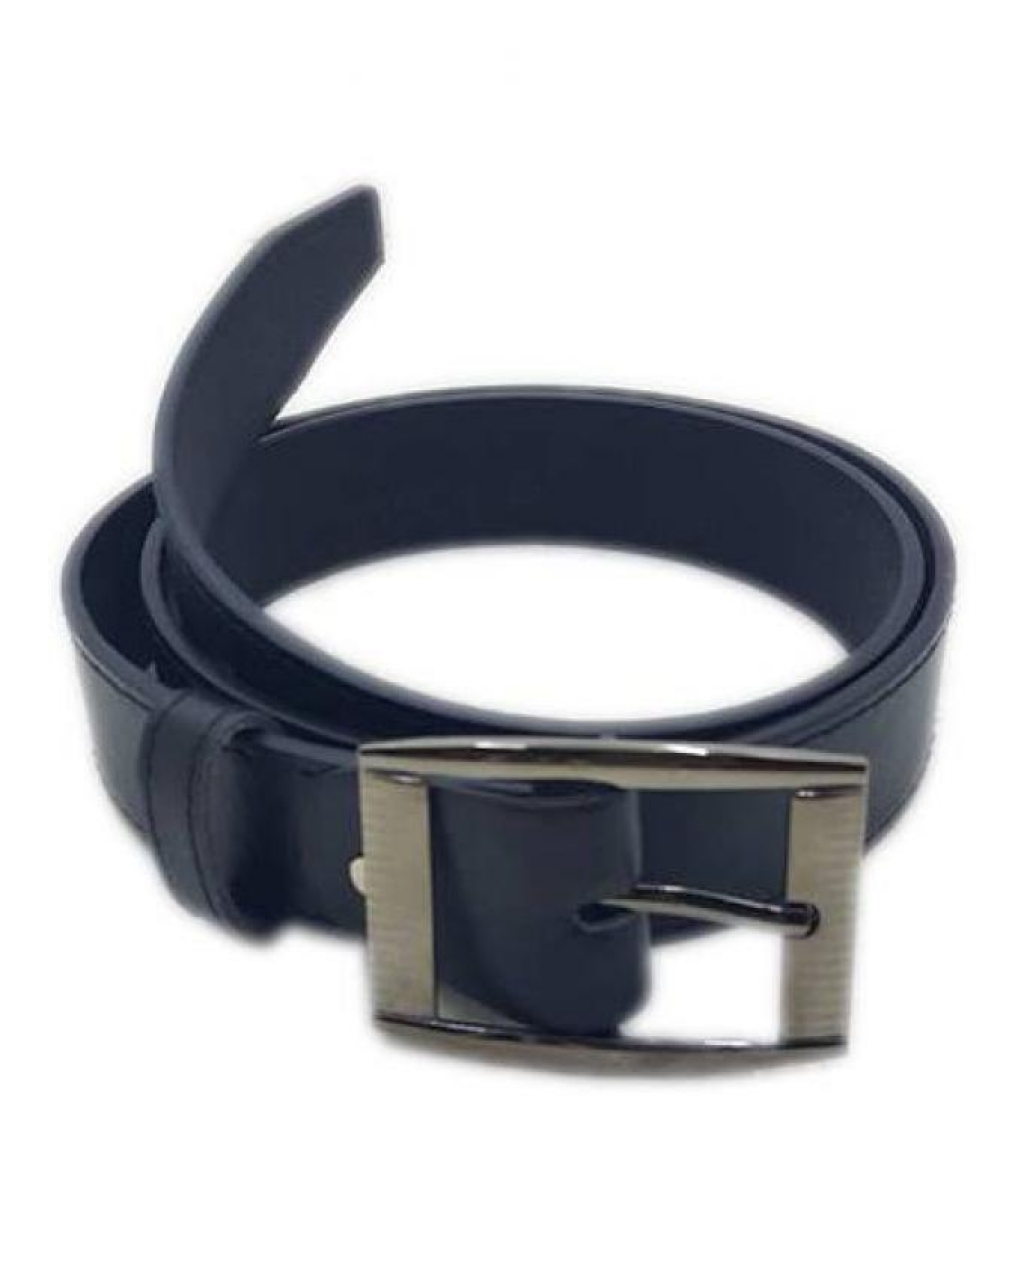 Buy Black leather casual belt for men in Pakistan | online shopping in ...